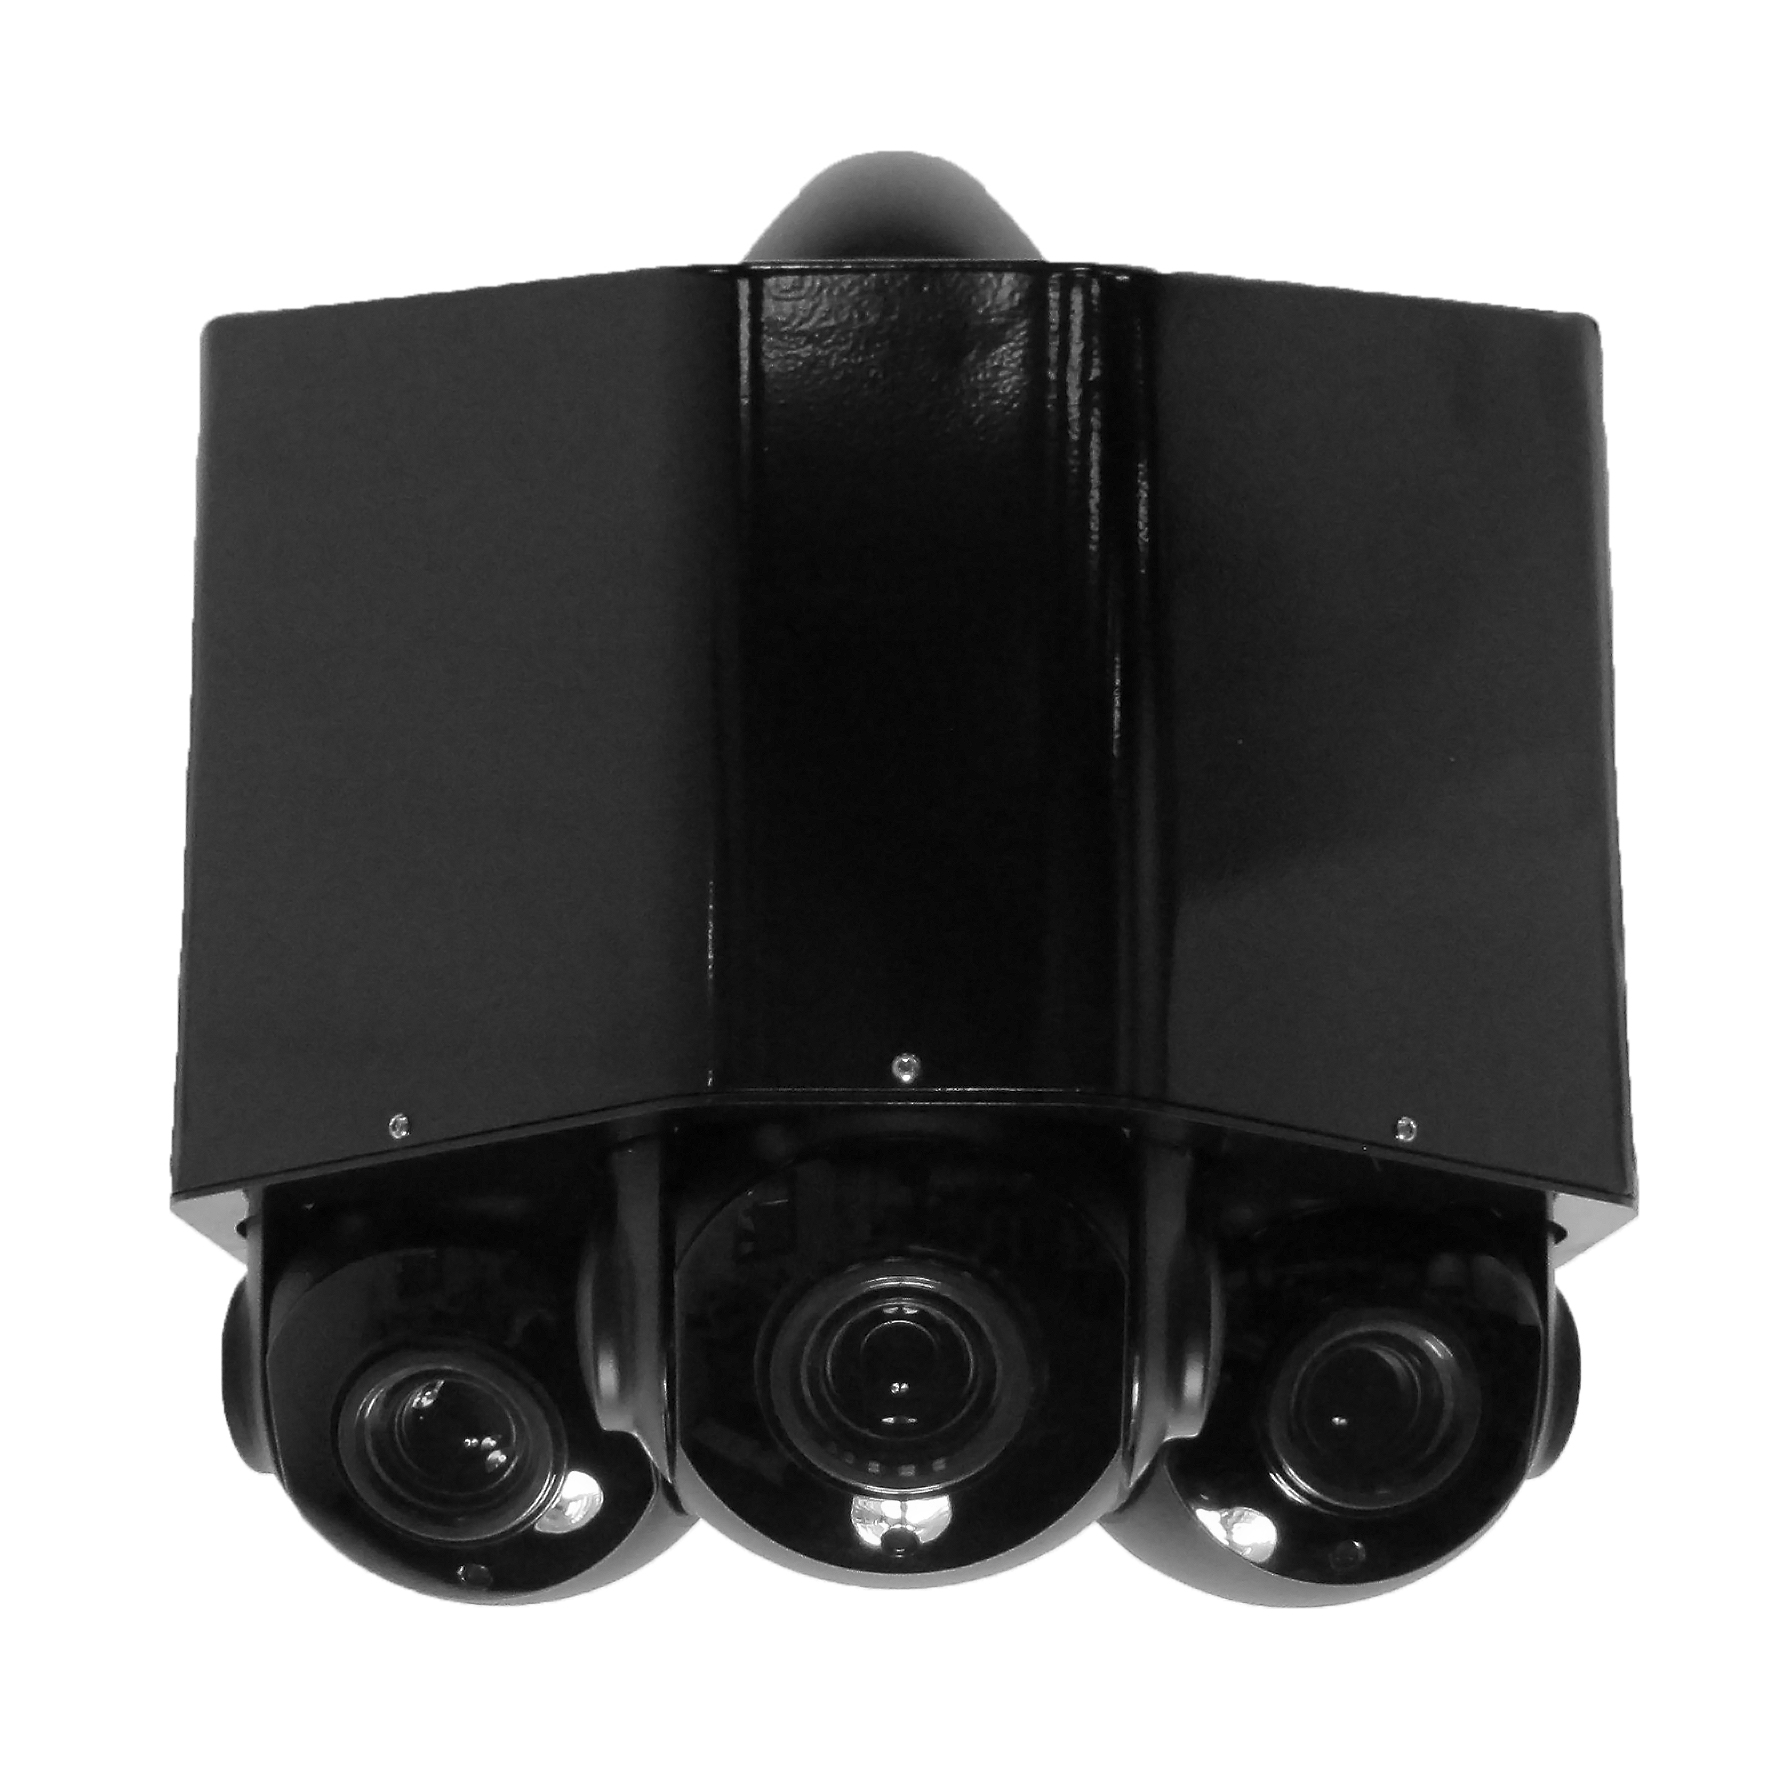 Photo of the NOMAD Multicam Hybrid